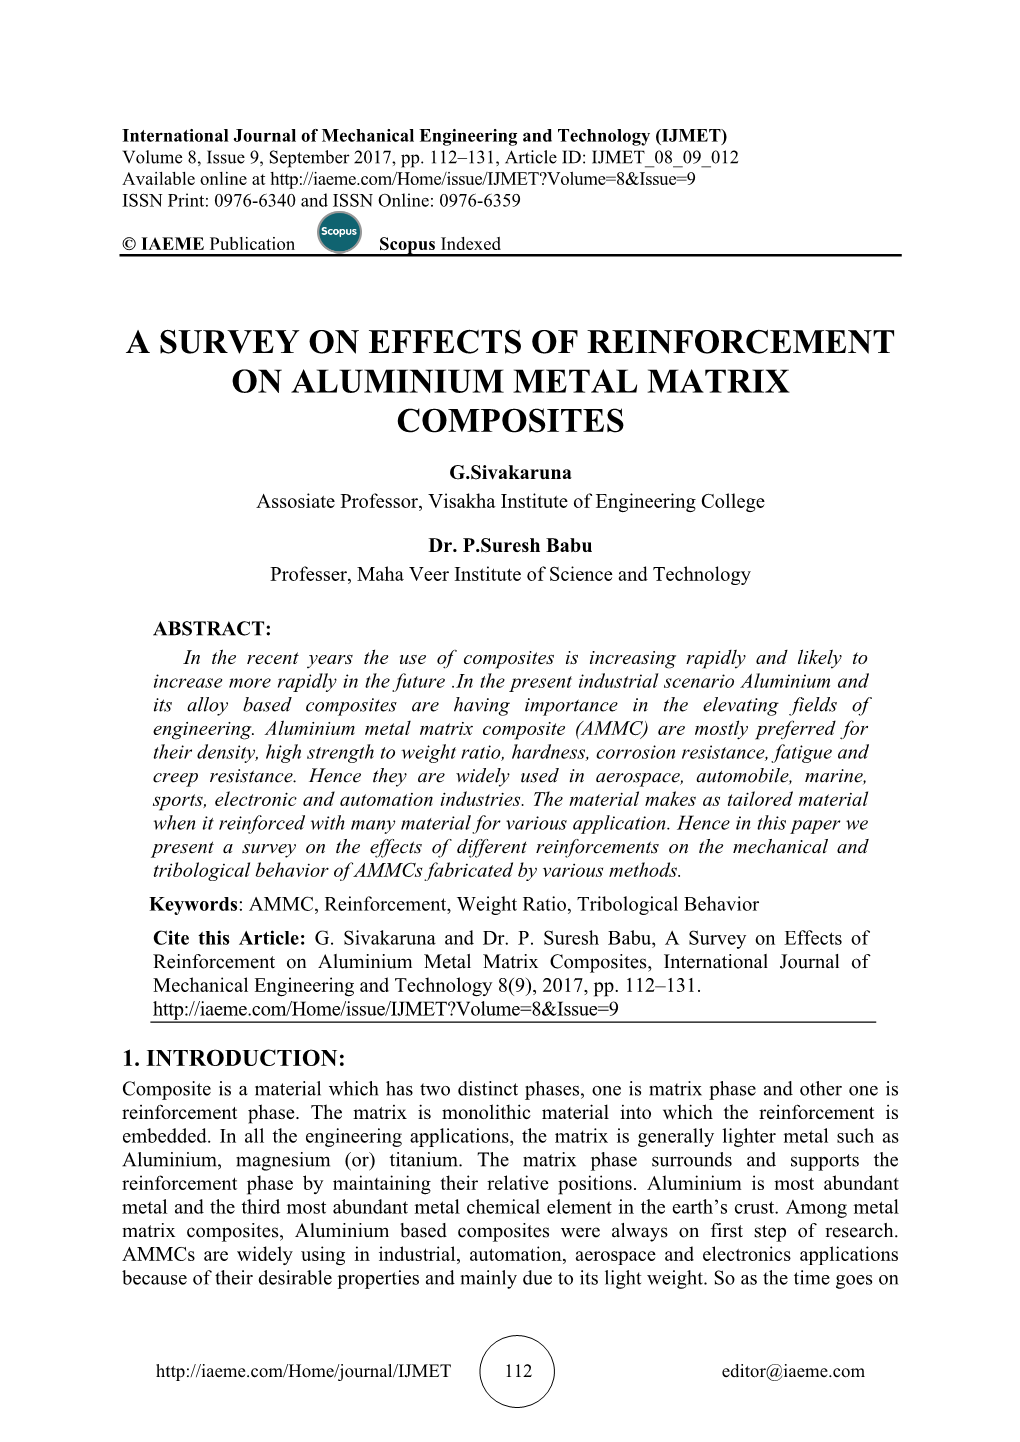 A Survey on Effects of Reinforcement on Aluminium Metal Matrix Composites